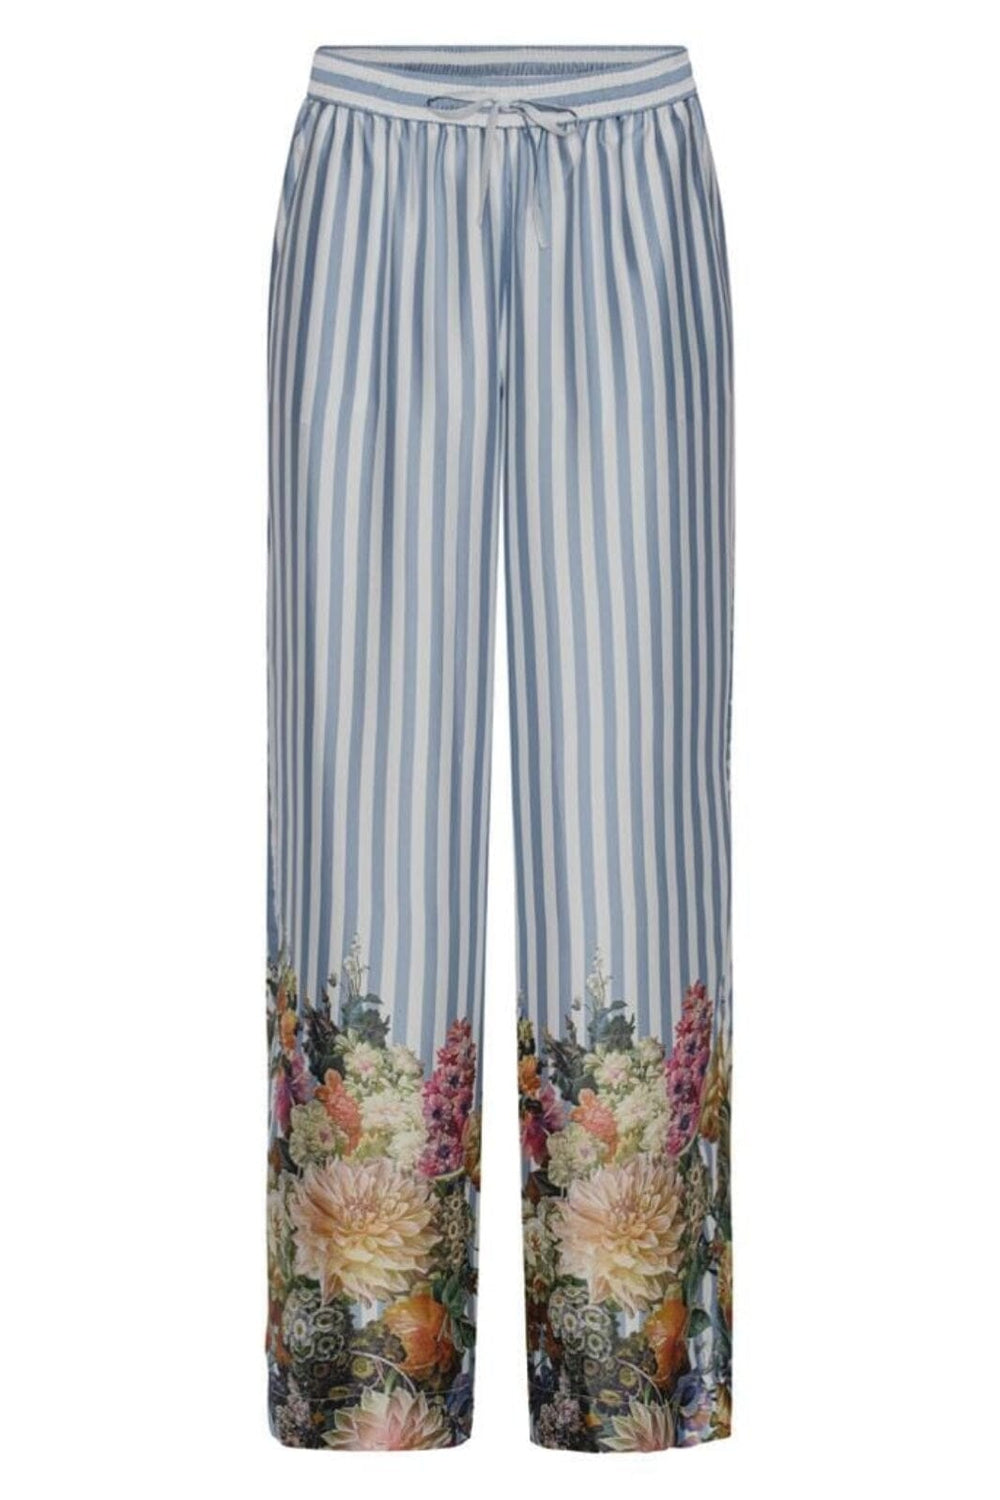 Forudbestilling - Karmamia - Nomi Pants - Floral Stripe Bukser 